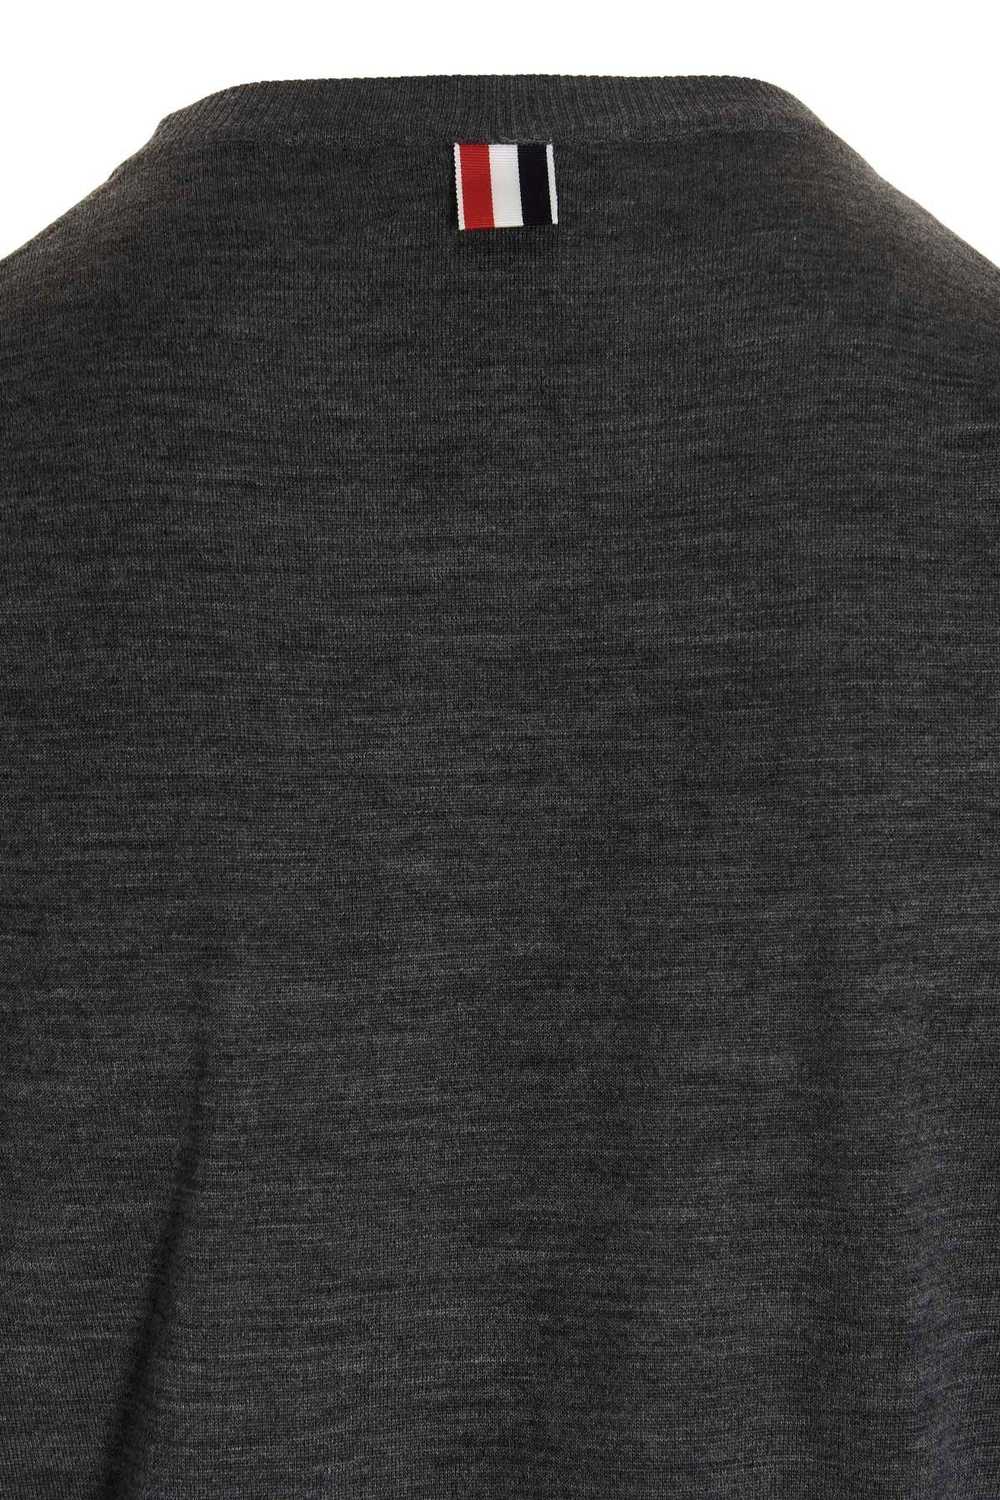 Thom Browne '4 bar' sweater - image 5